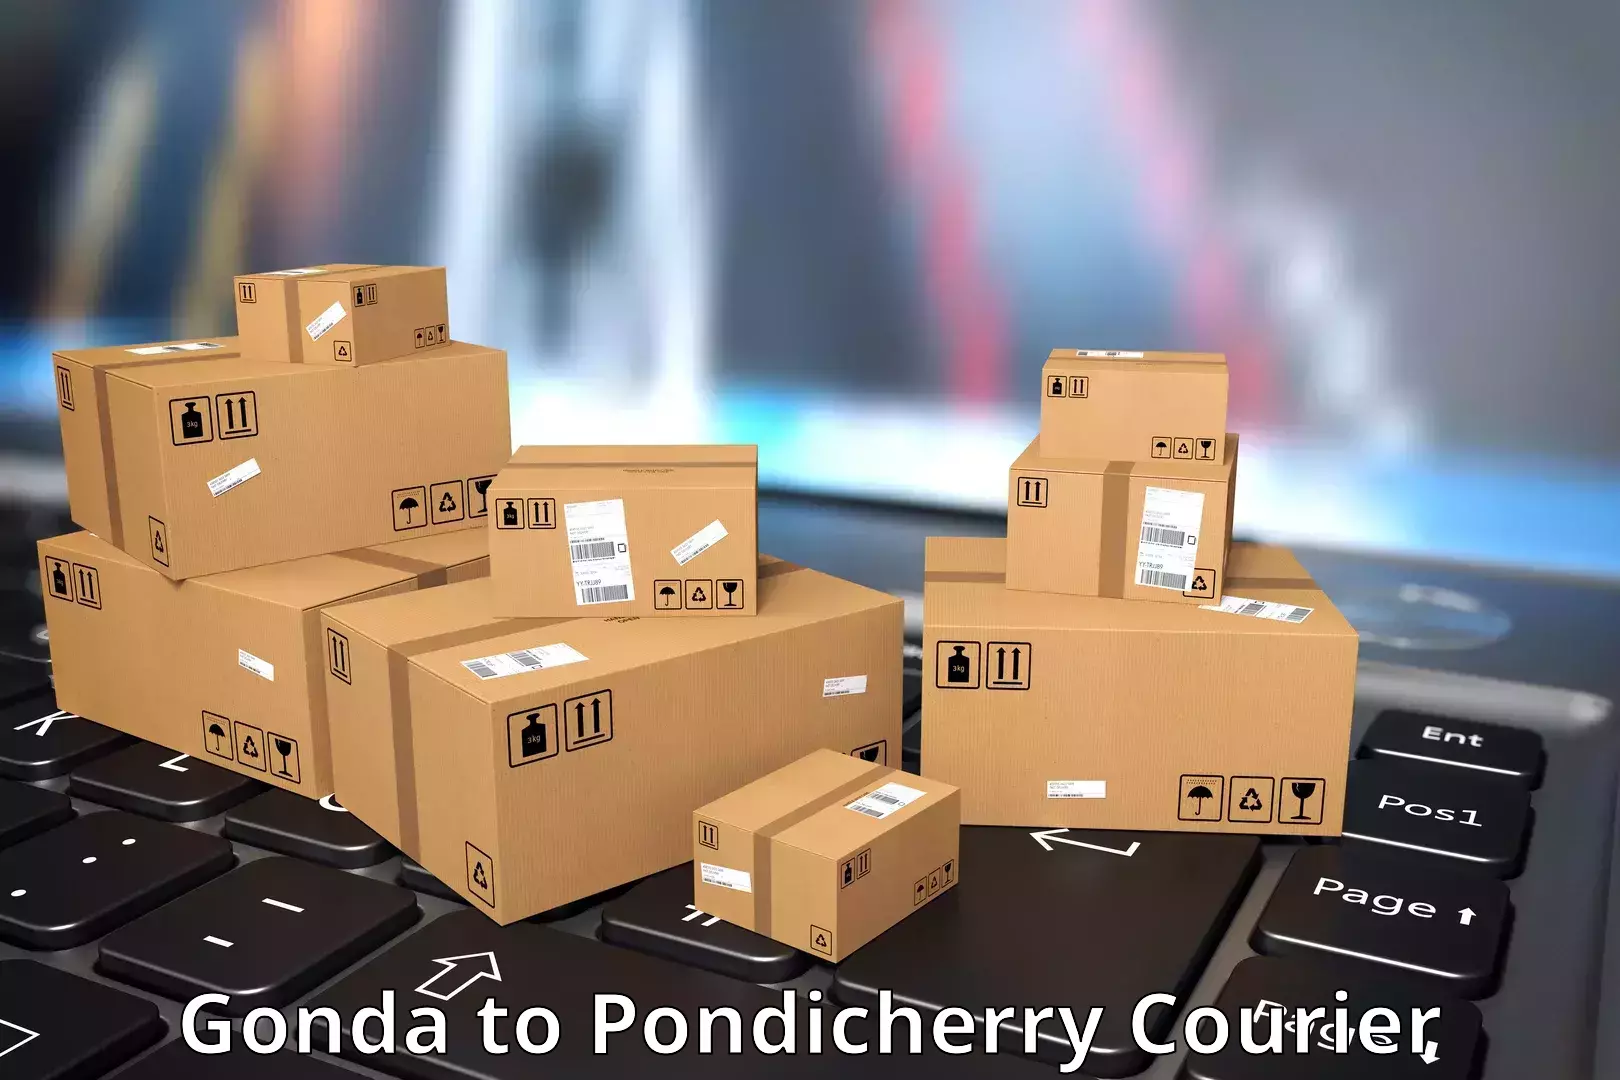 Parcel handling and care Gonda to Pondicherry